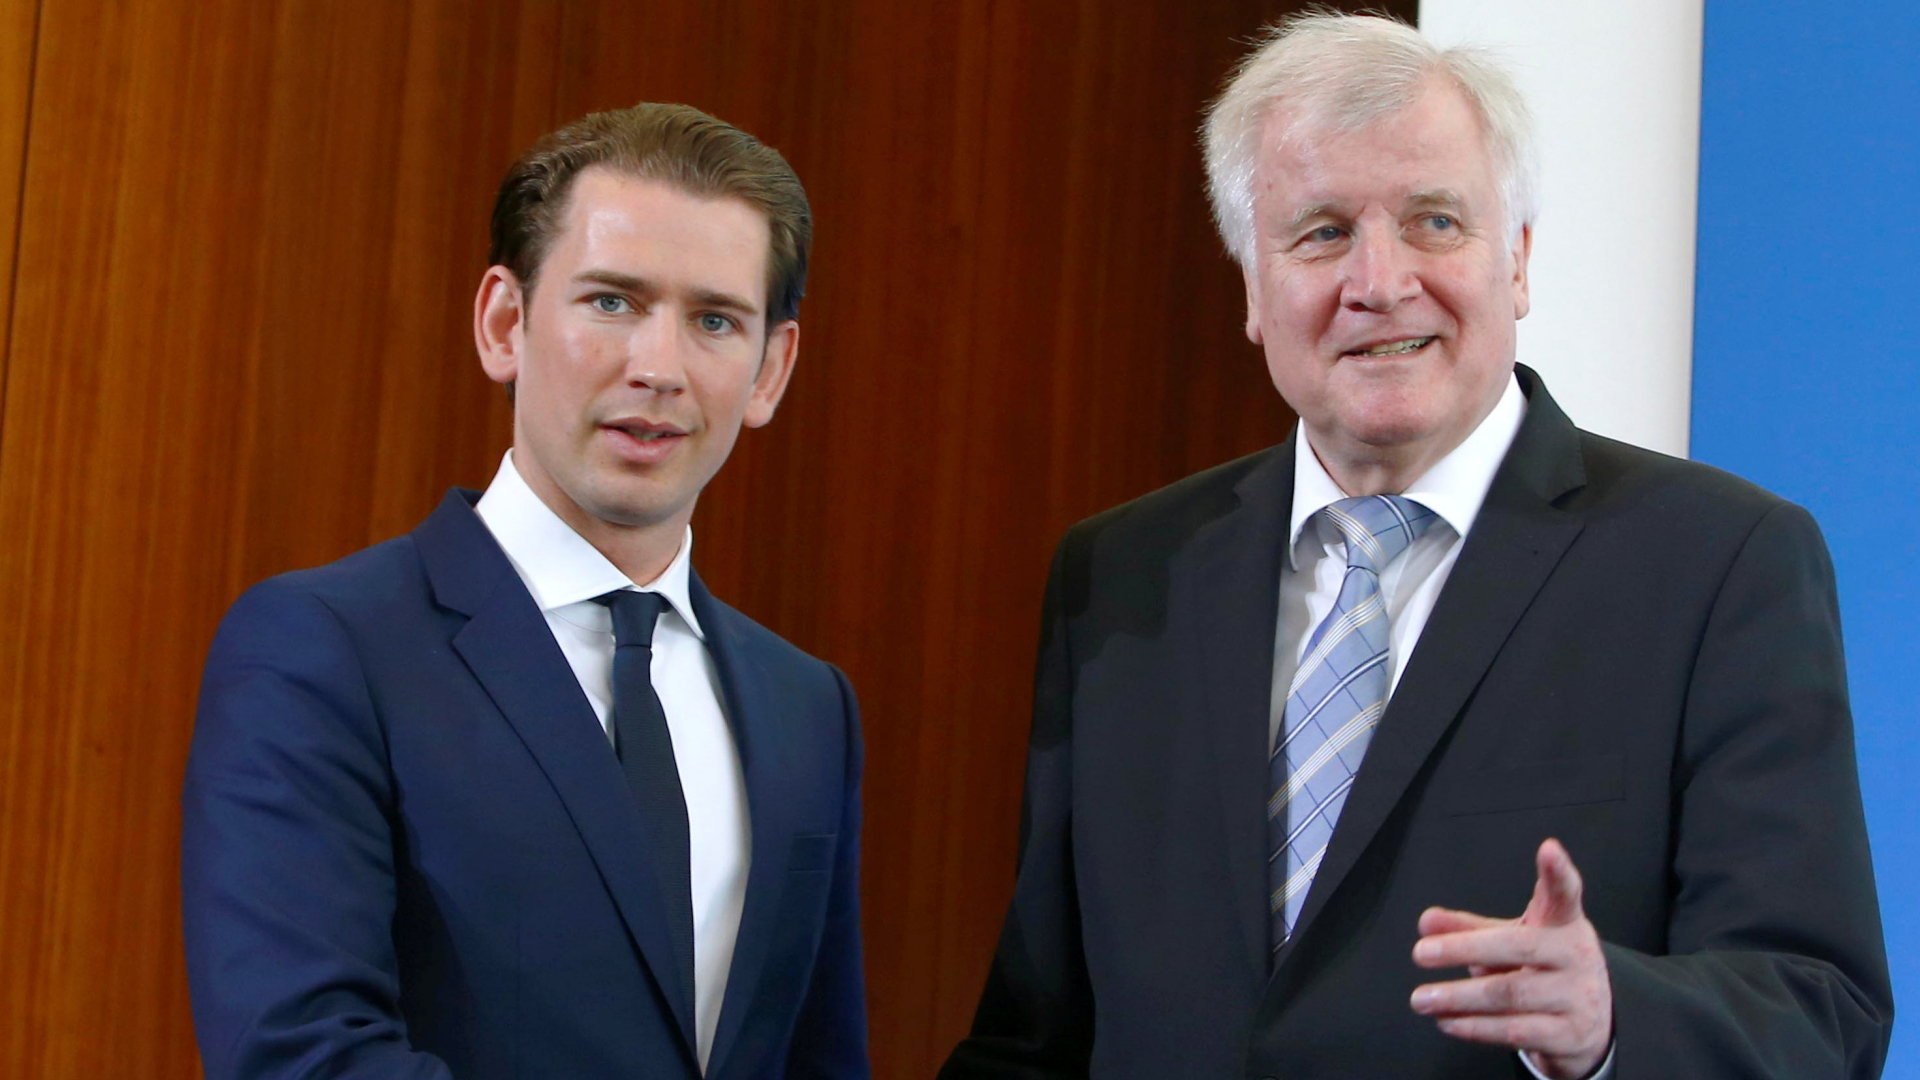 Österreichs Bundeskanzler Sebastian Kurz und Bundesinnenminister Horst Seehofer | REUTERS